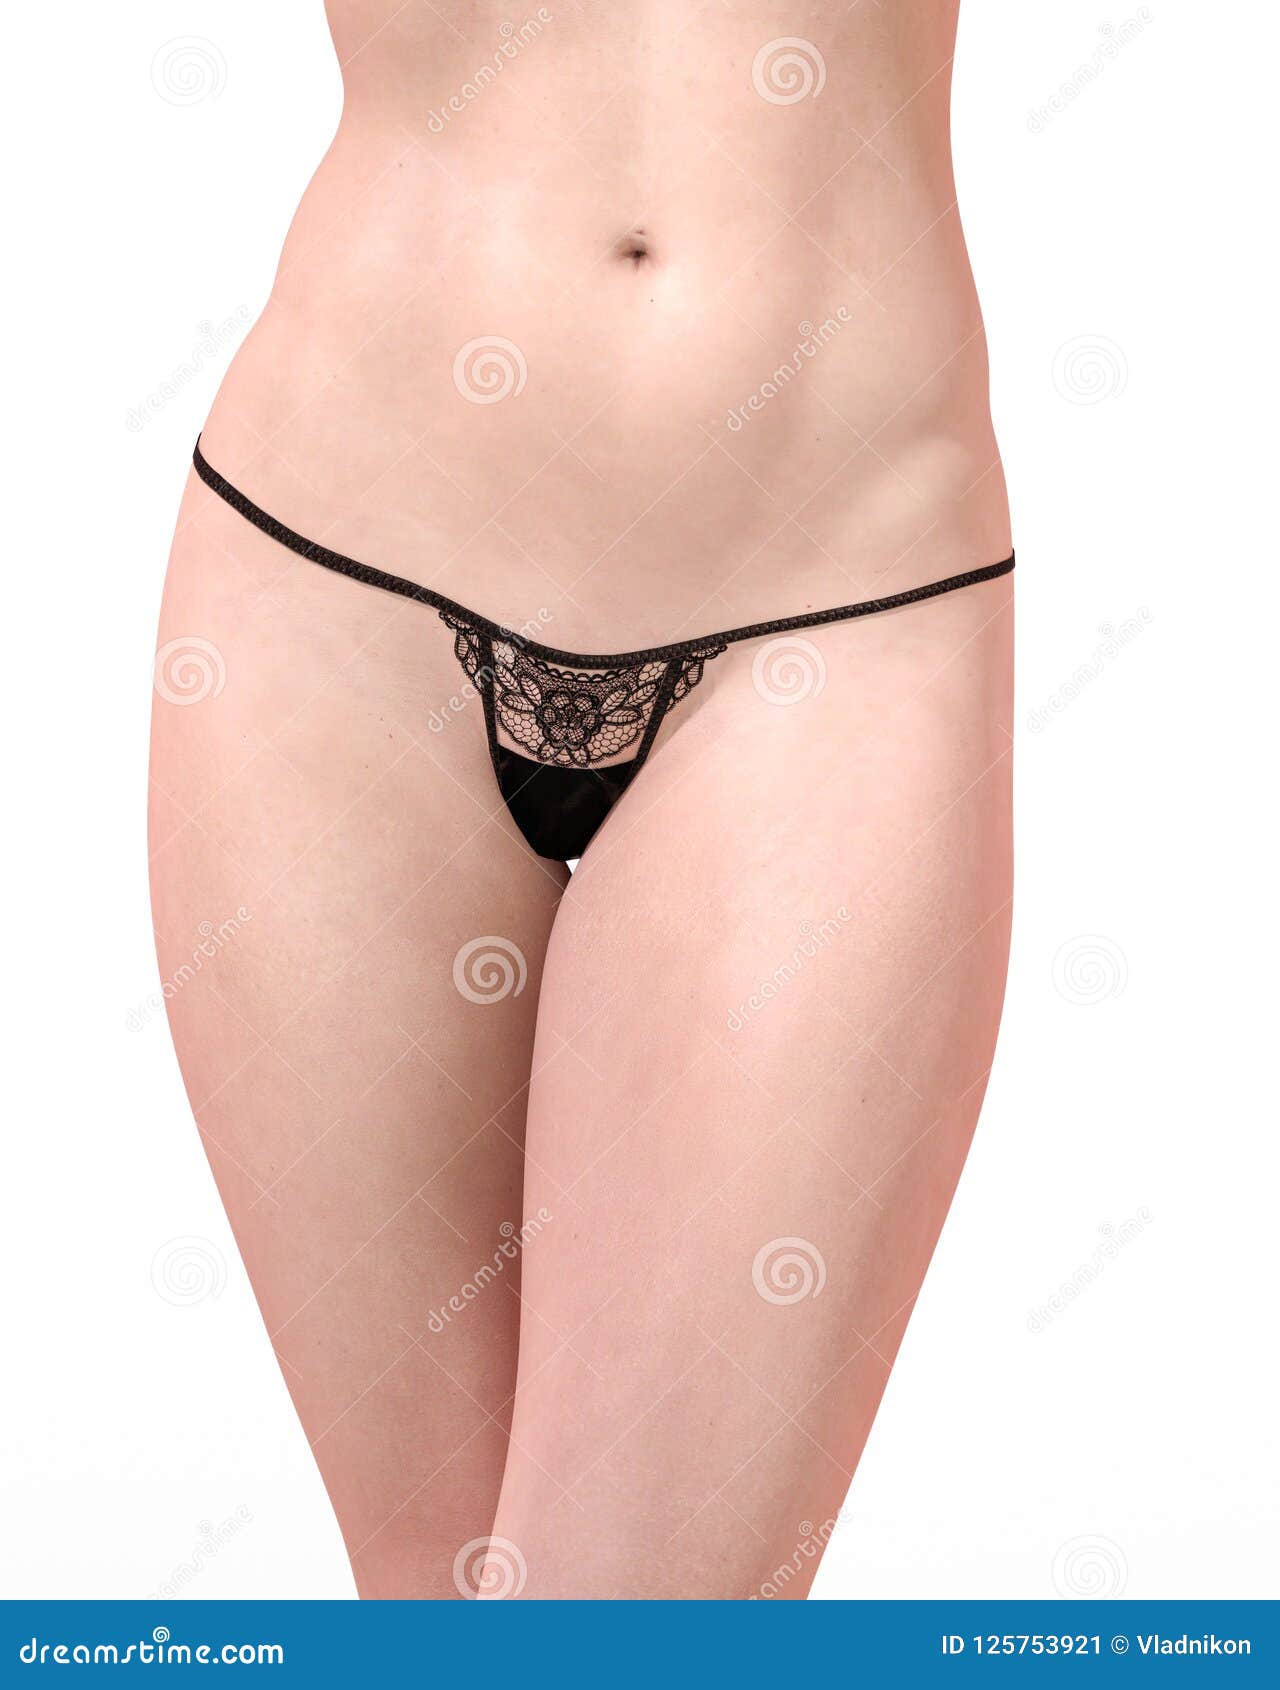 Girl in Panty. Transparent Panties Underwear. Stock Illustration